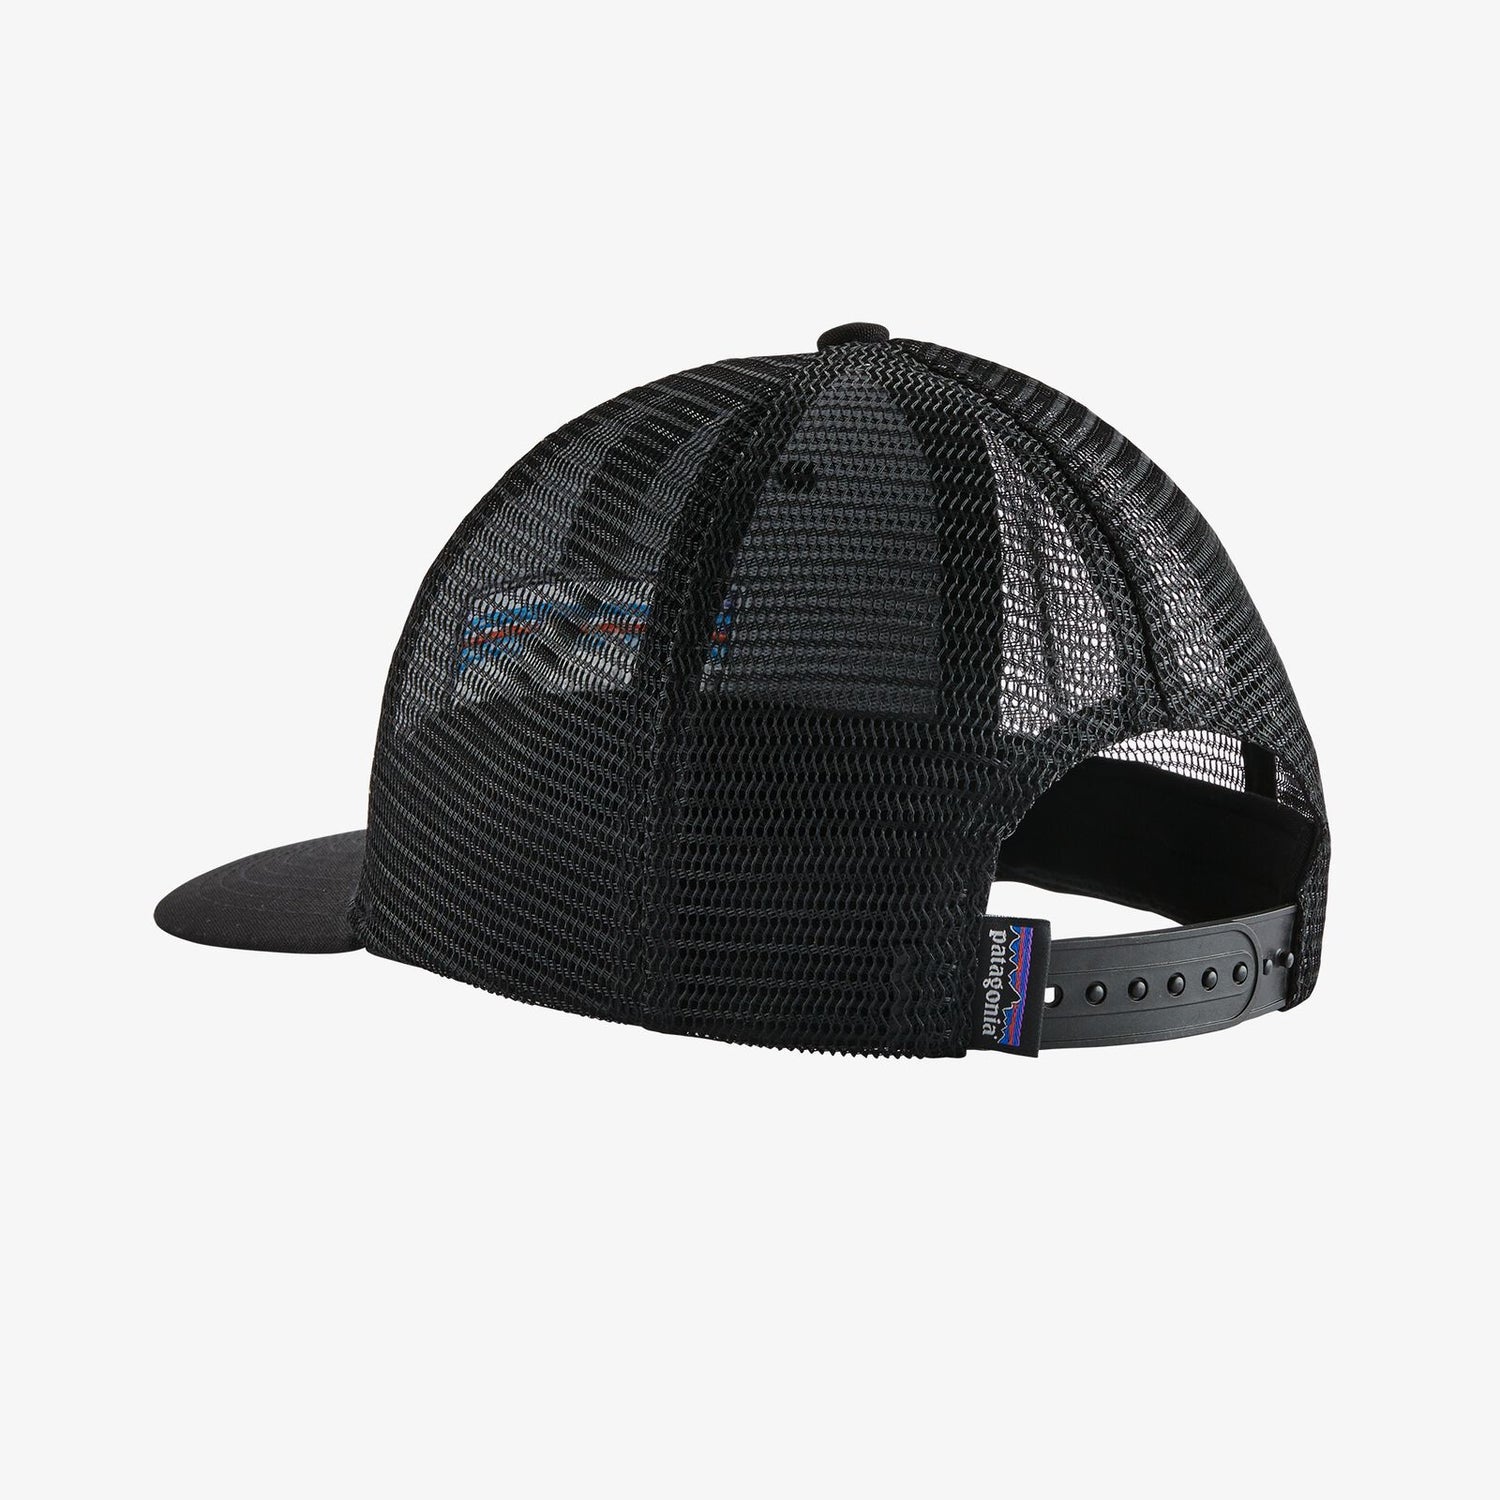 Patagonia Unisex P-6 Logo Trucker Hat - Organic Cotton Black Headwear